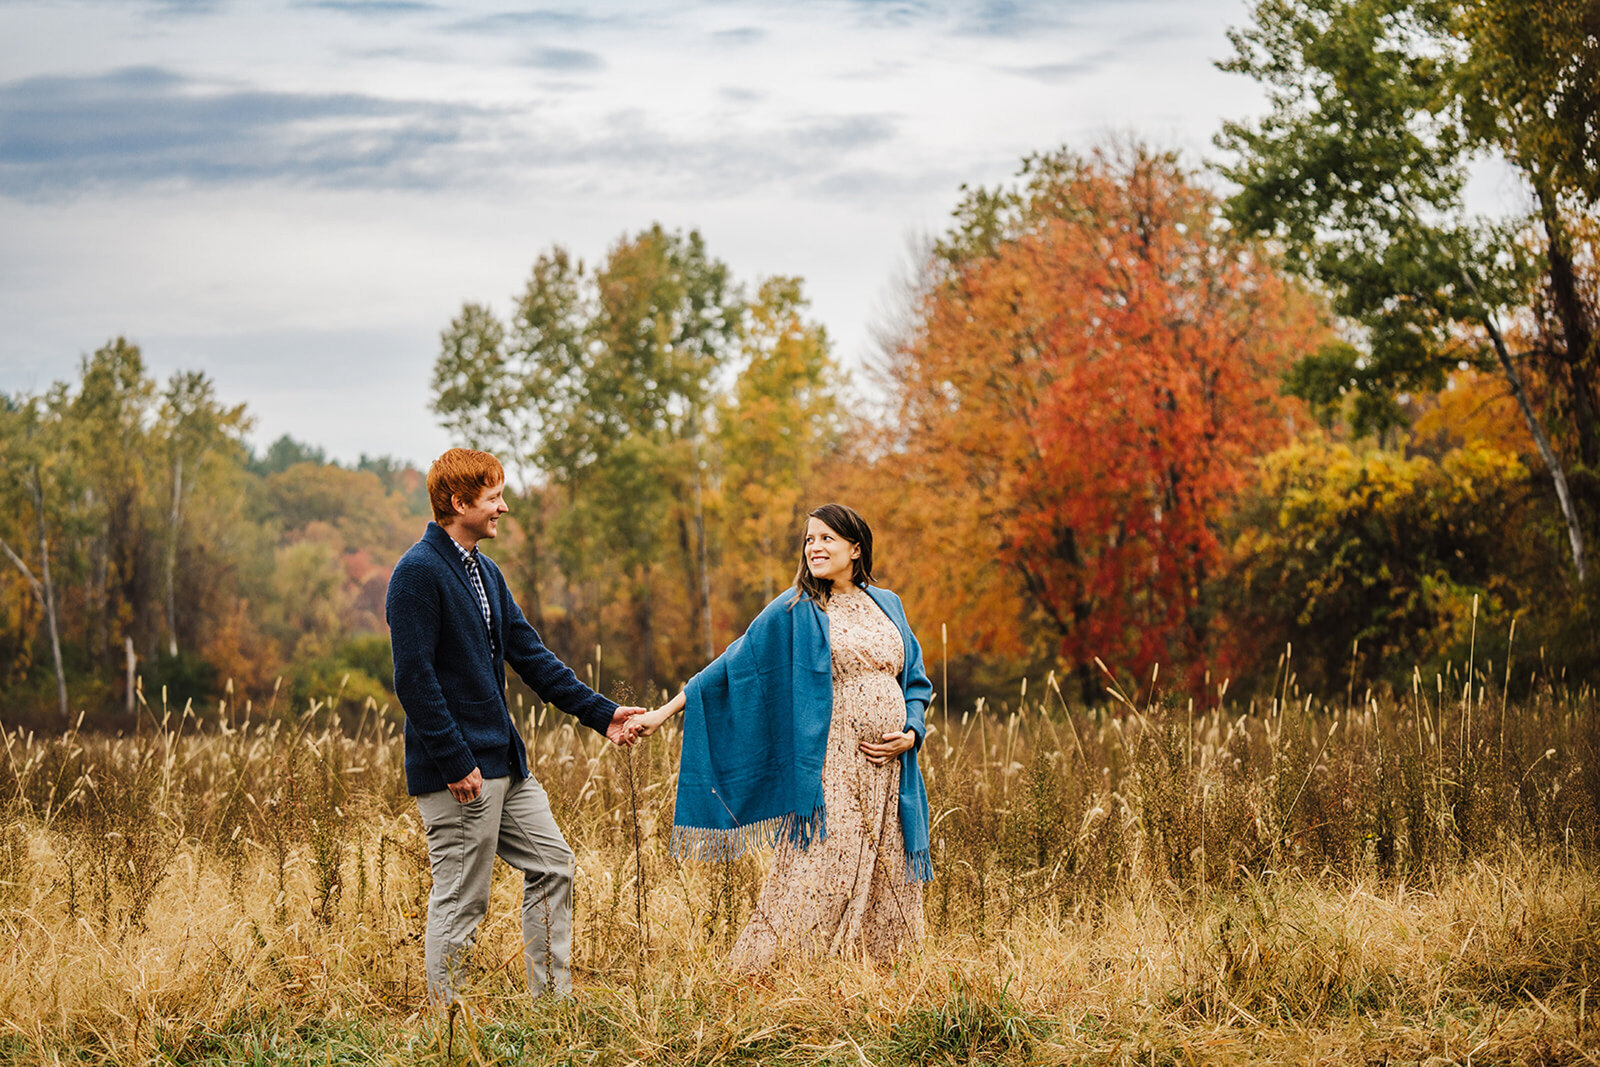 pregnant couple walks through autumn field holding hands